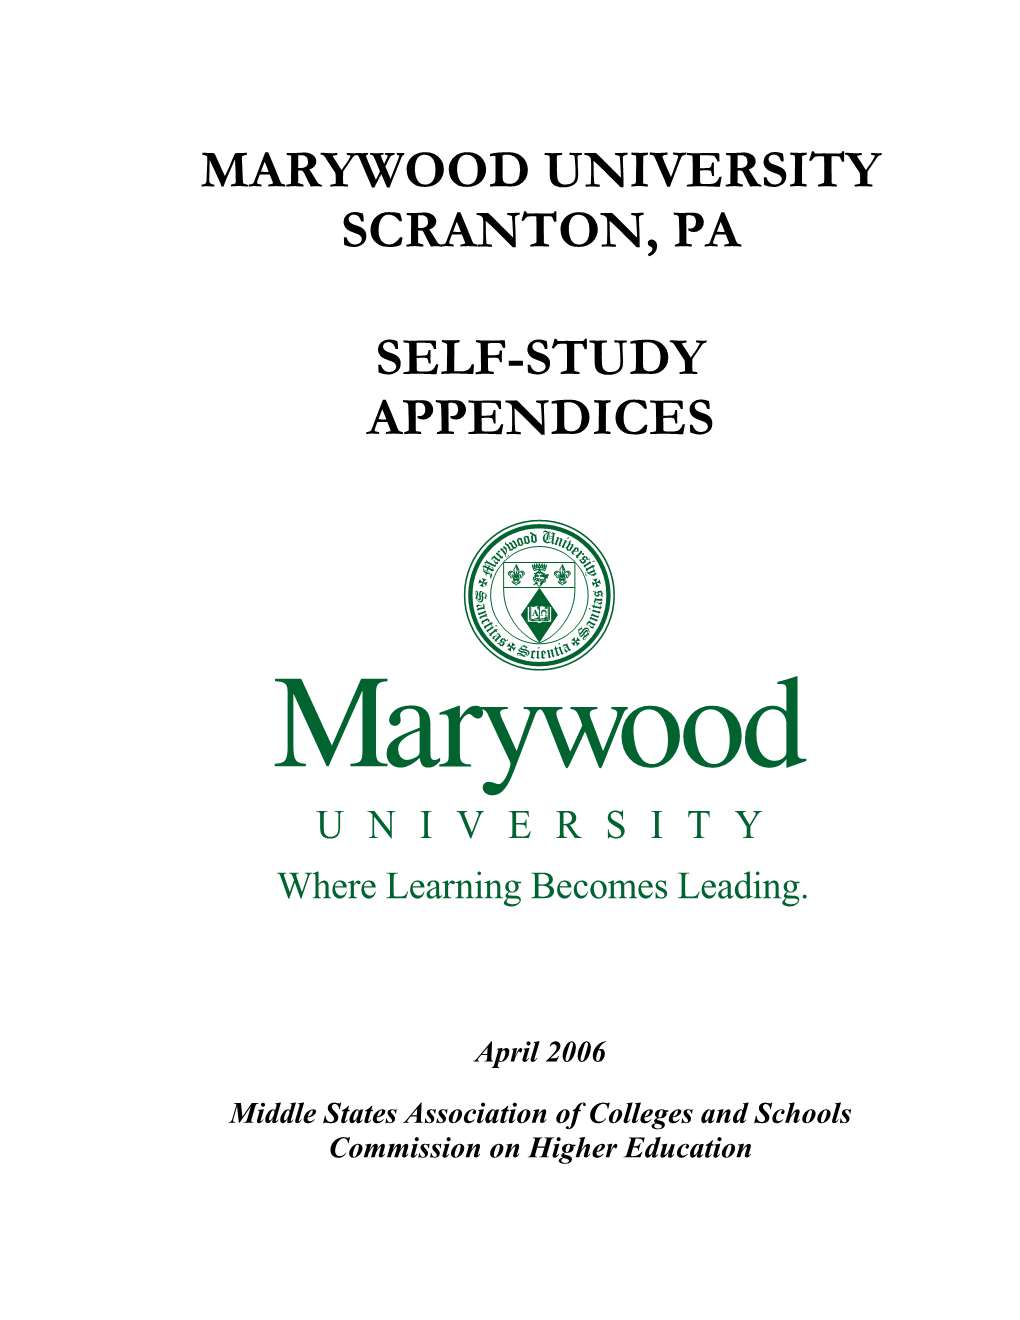 Marywood University Scranton, Pa Self-Study